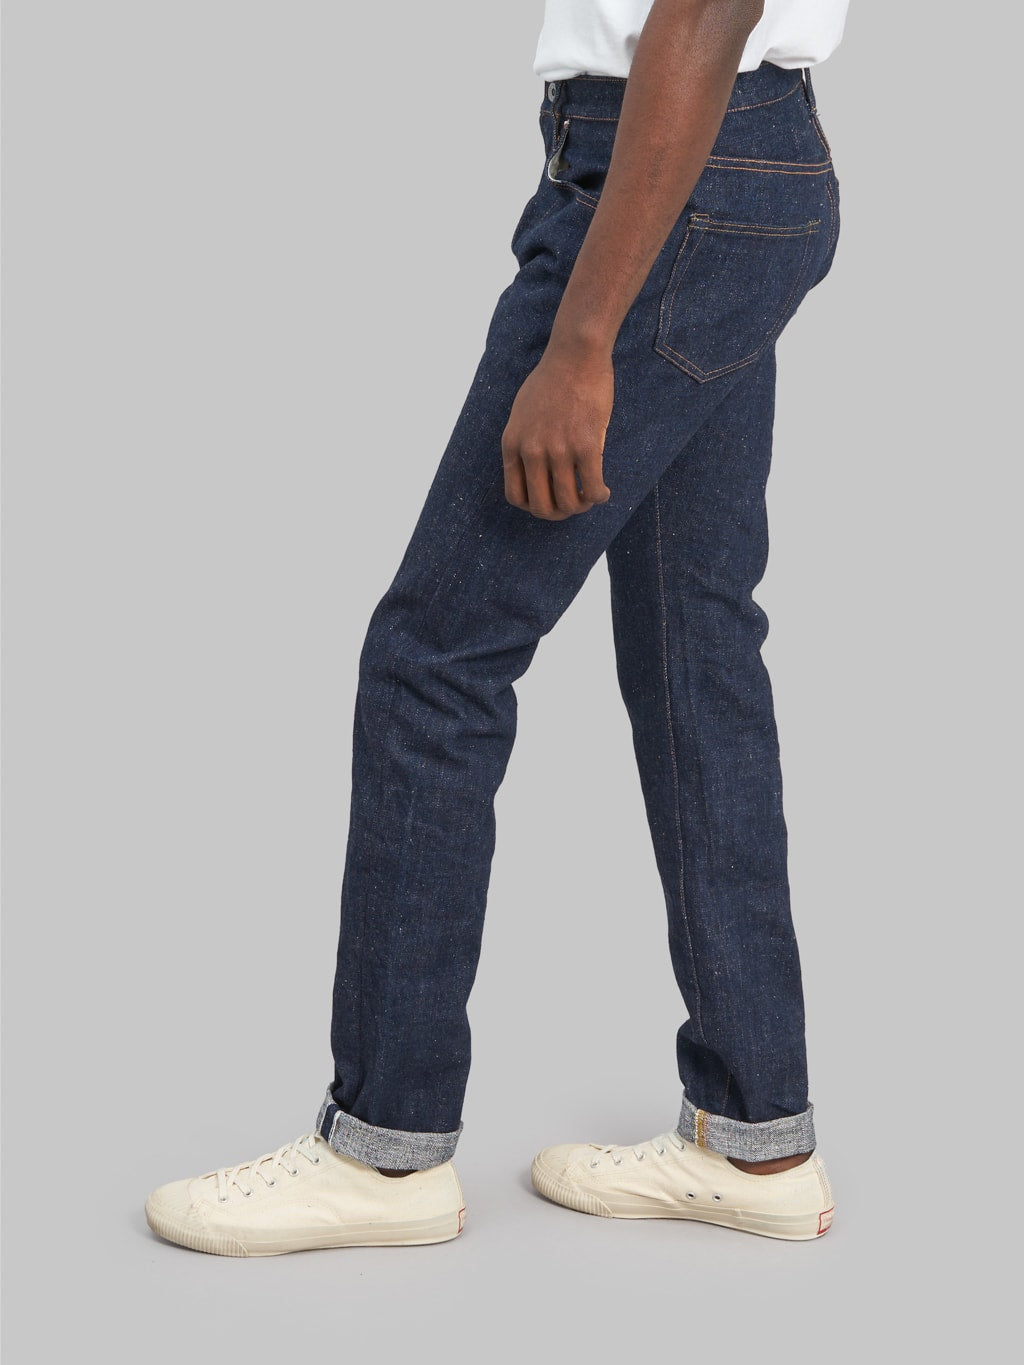 samurai jeans s211ax ai benkei natural indigo 18oz relaxed tapered jeans style